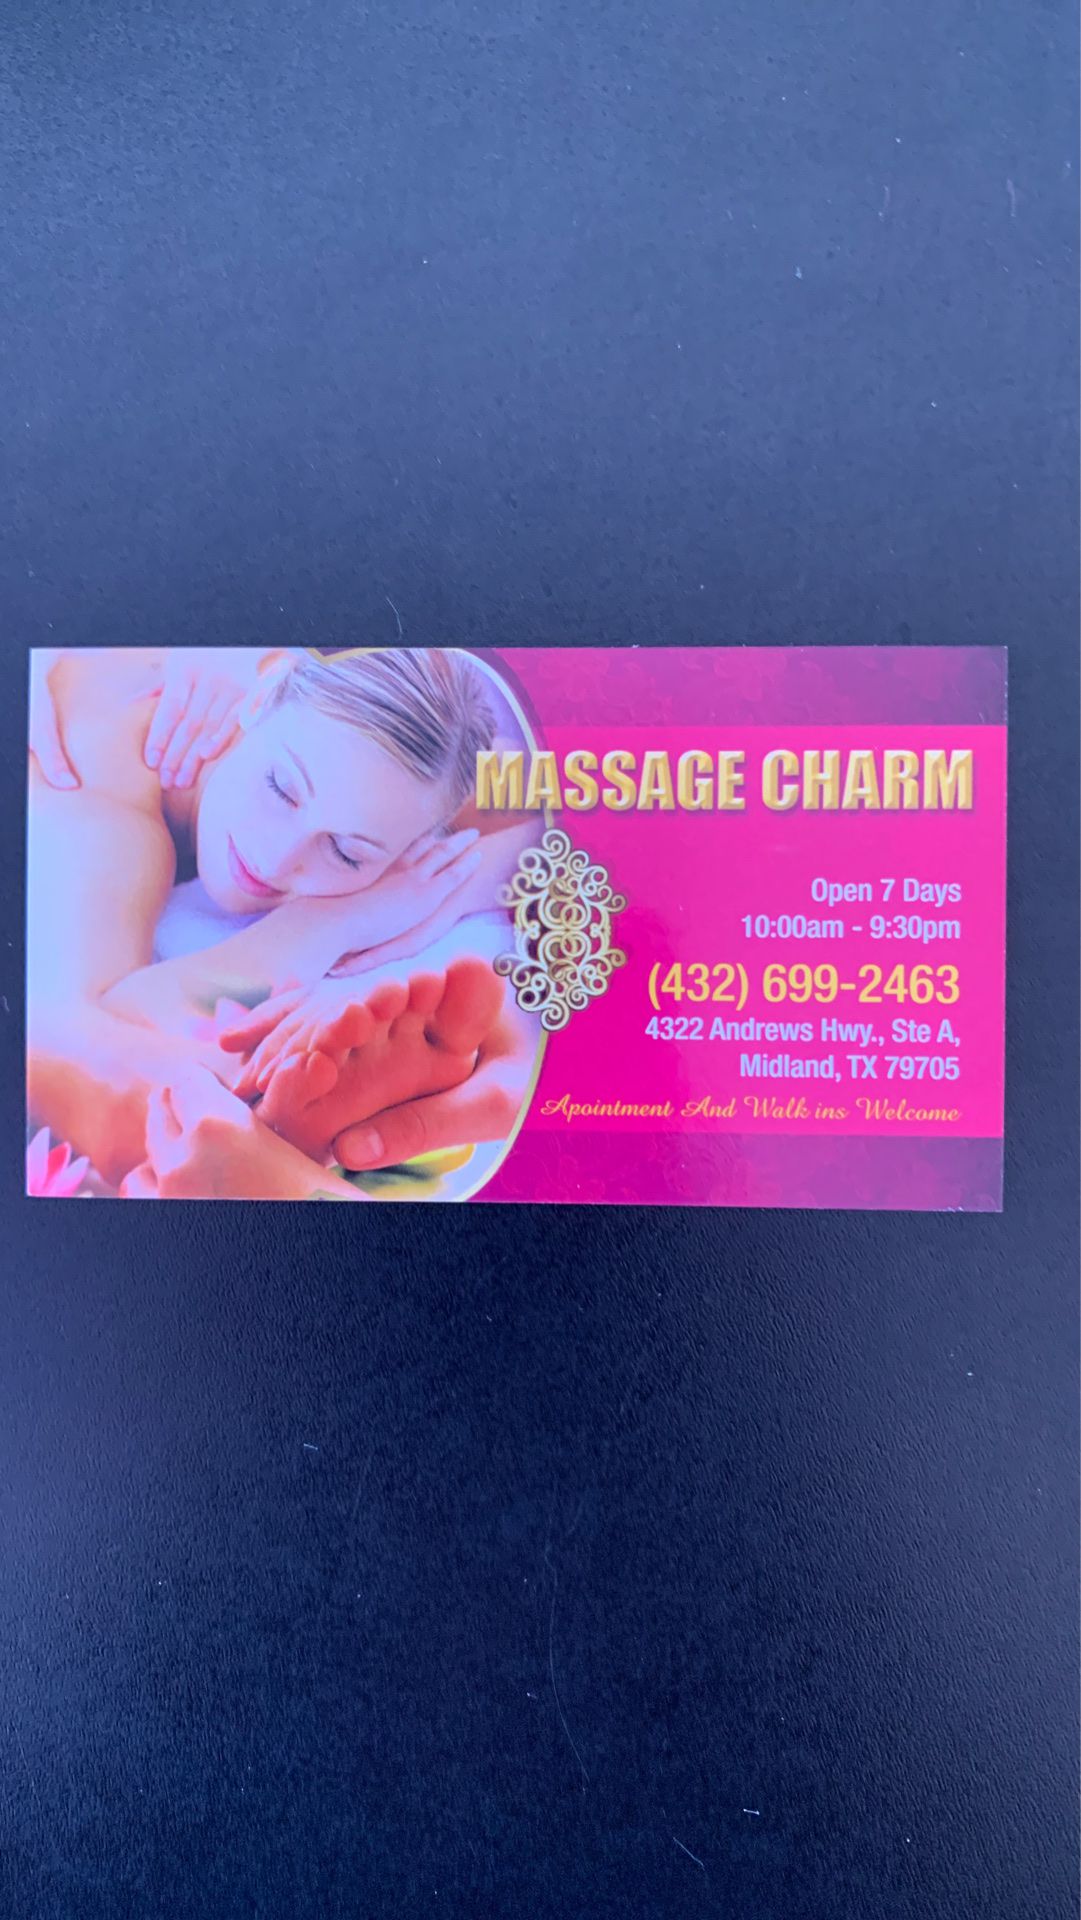 Massage charm